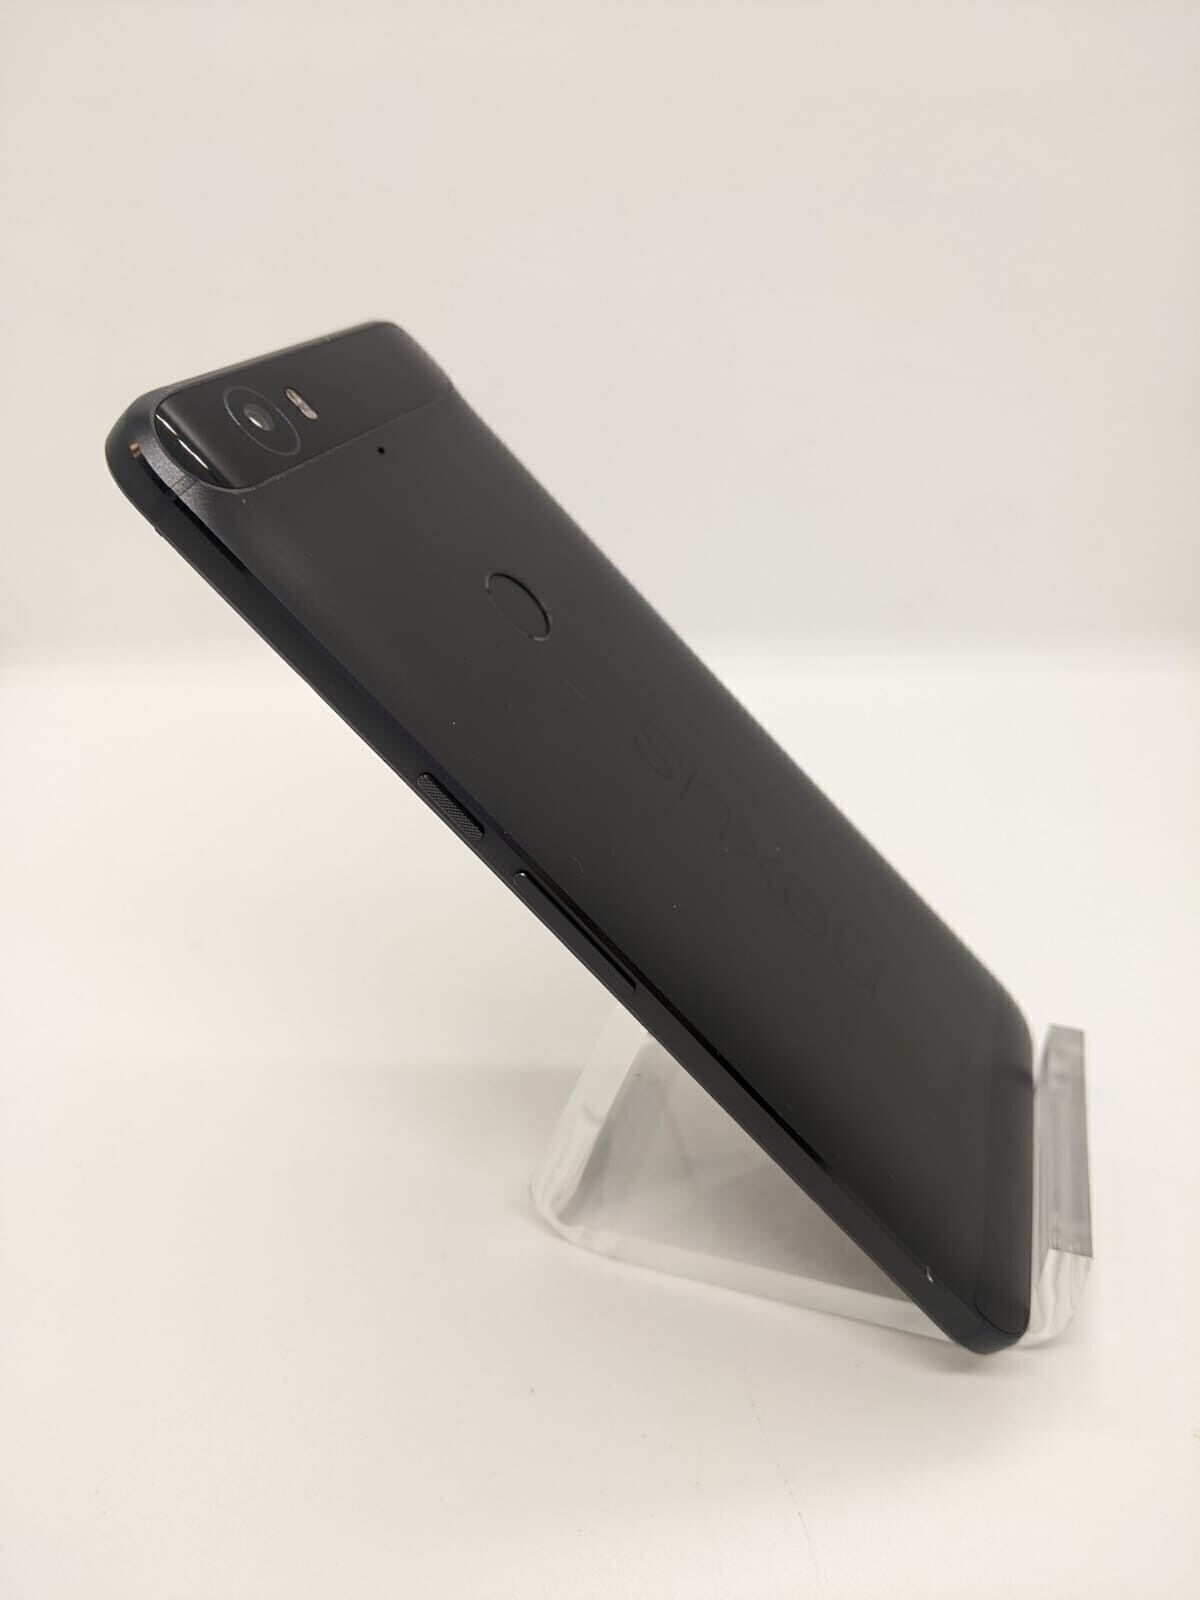 Huawei Nexus 6P 32GB Unlocked Rooted Kali Nethunter Smartphone H1511 Black